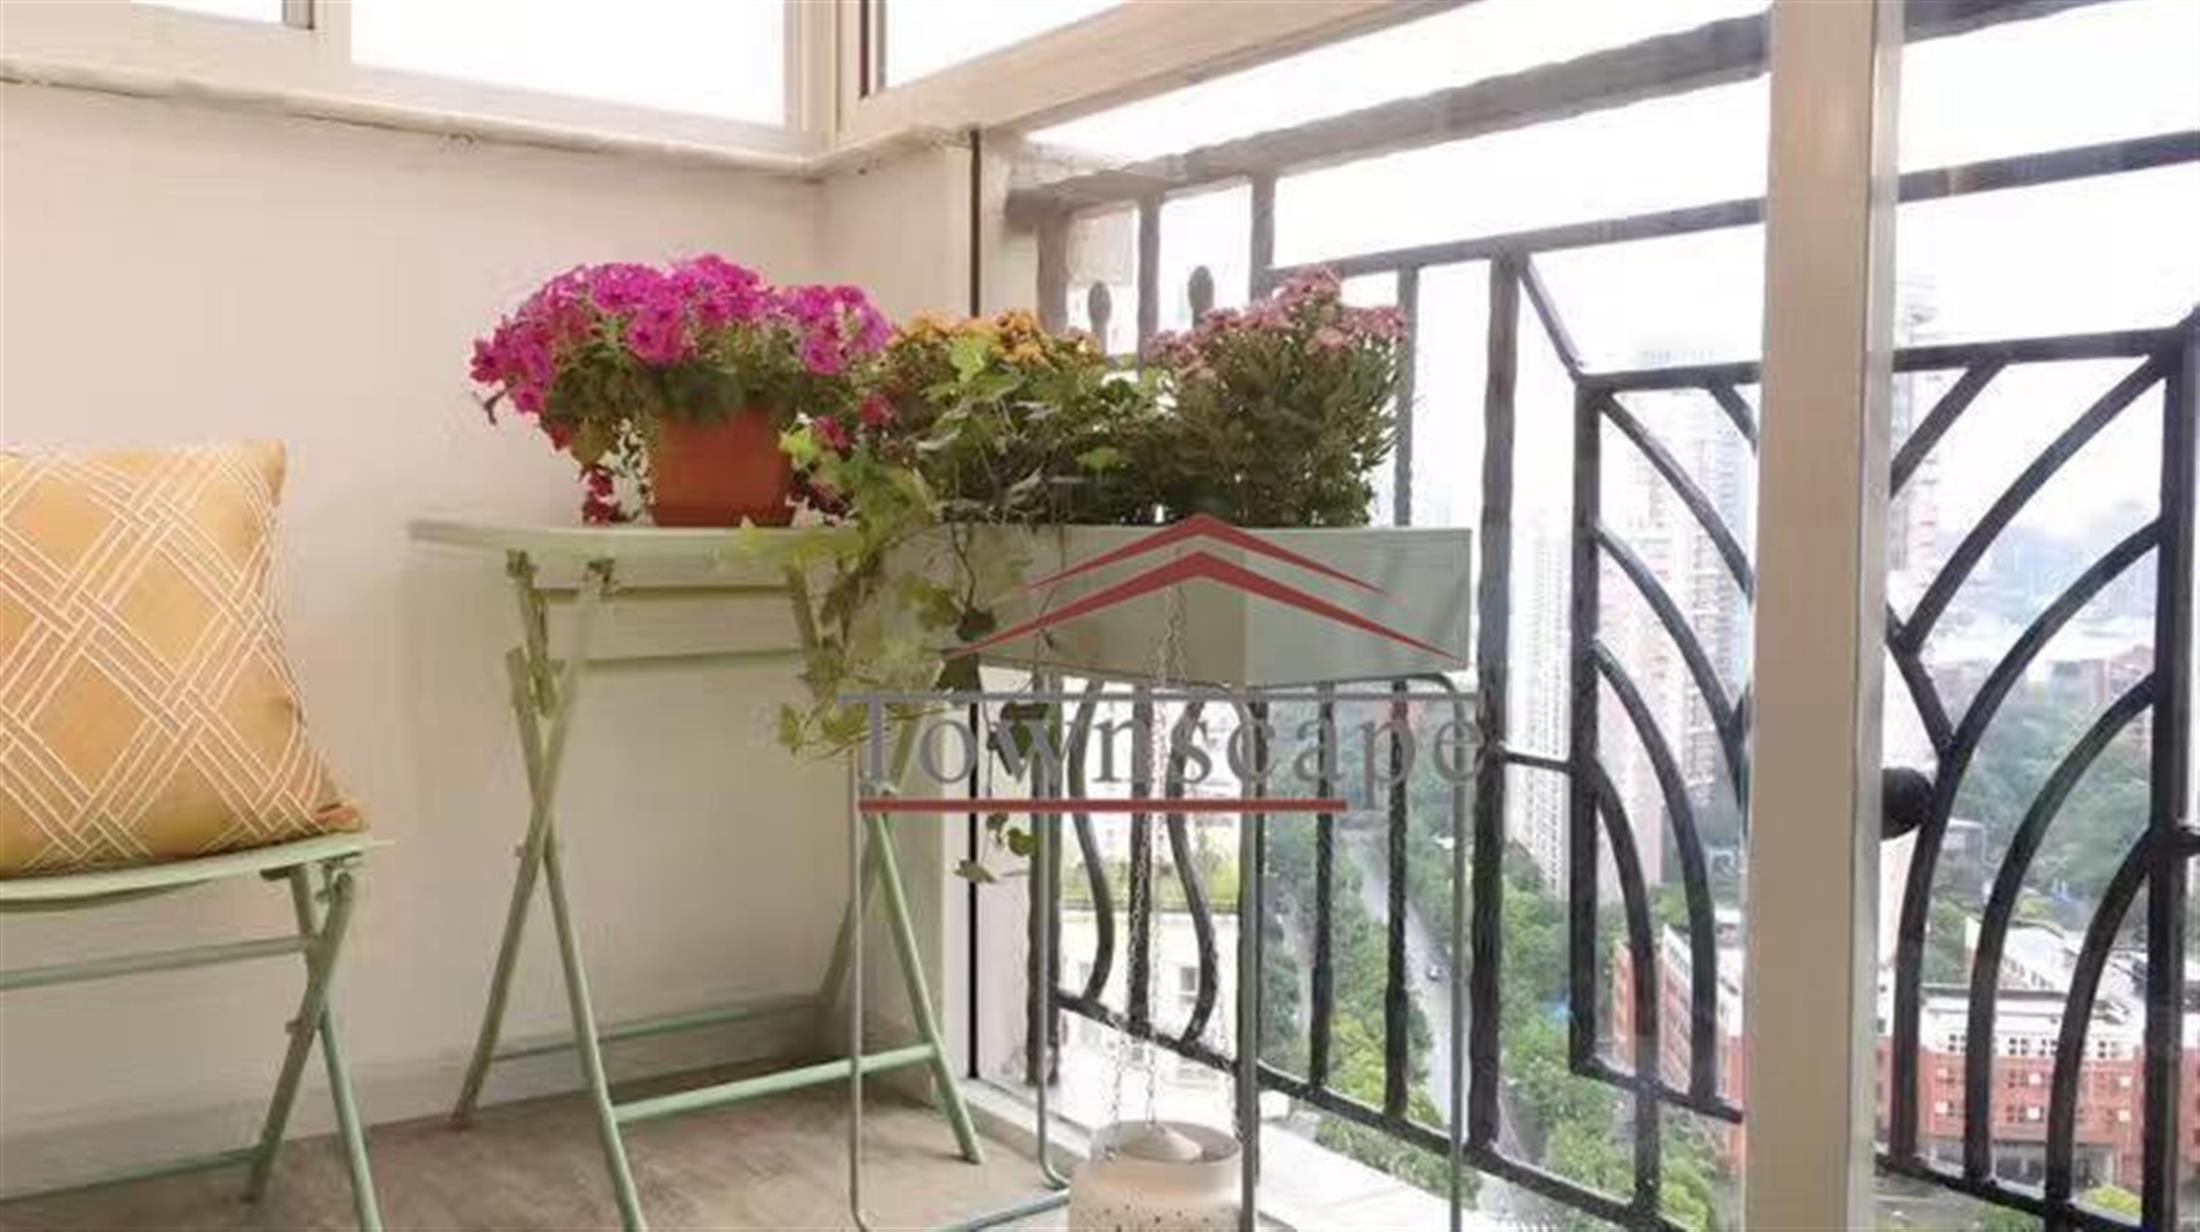 sunny balcony Big Bright LJZ Apartment for Rent in Shanghai